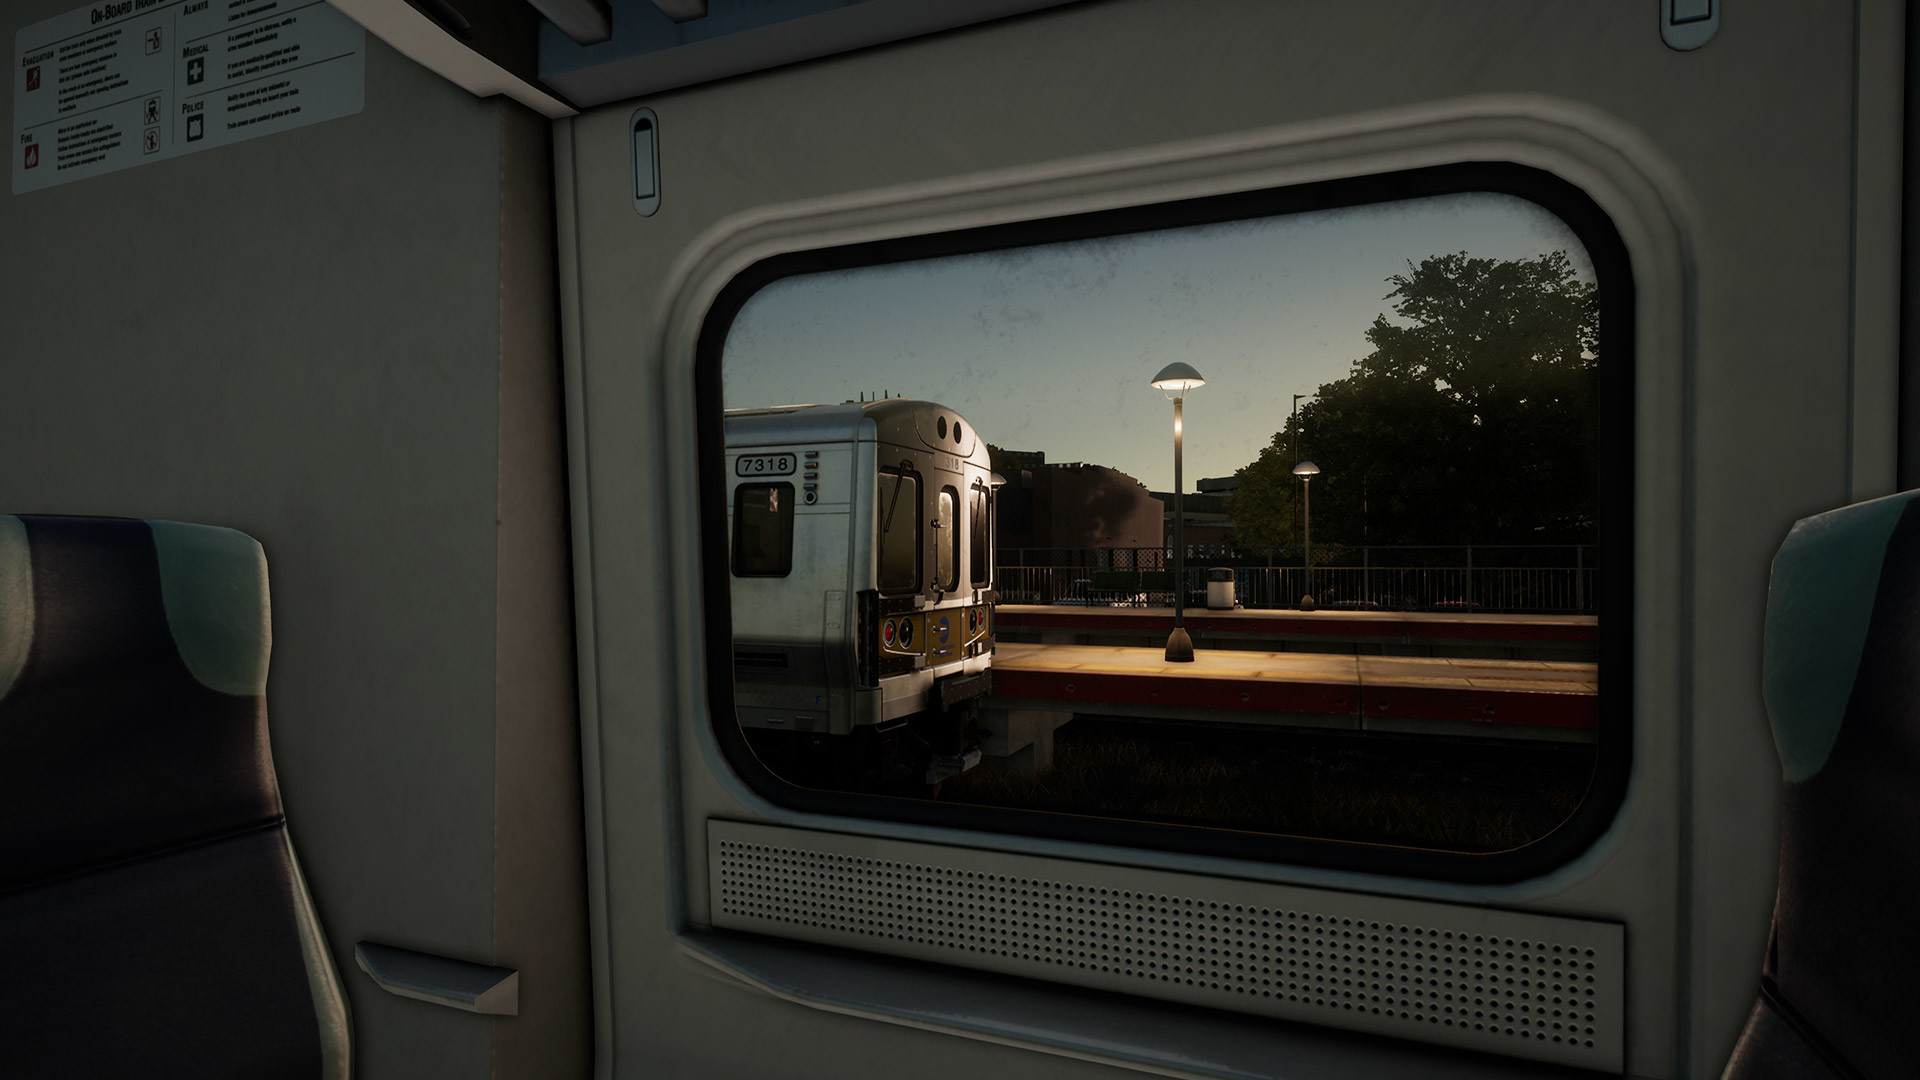 Train Sim World 2: Long Island Rail Road: New York - Hicksville Route Add-On DLC Steam CD Key [$ 5.63]